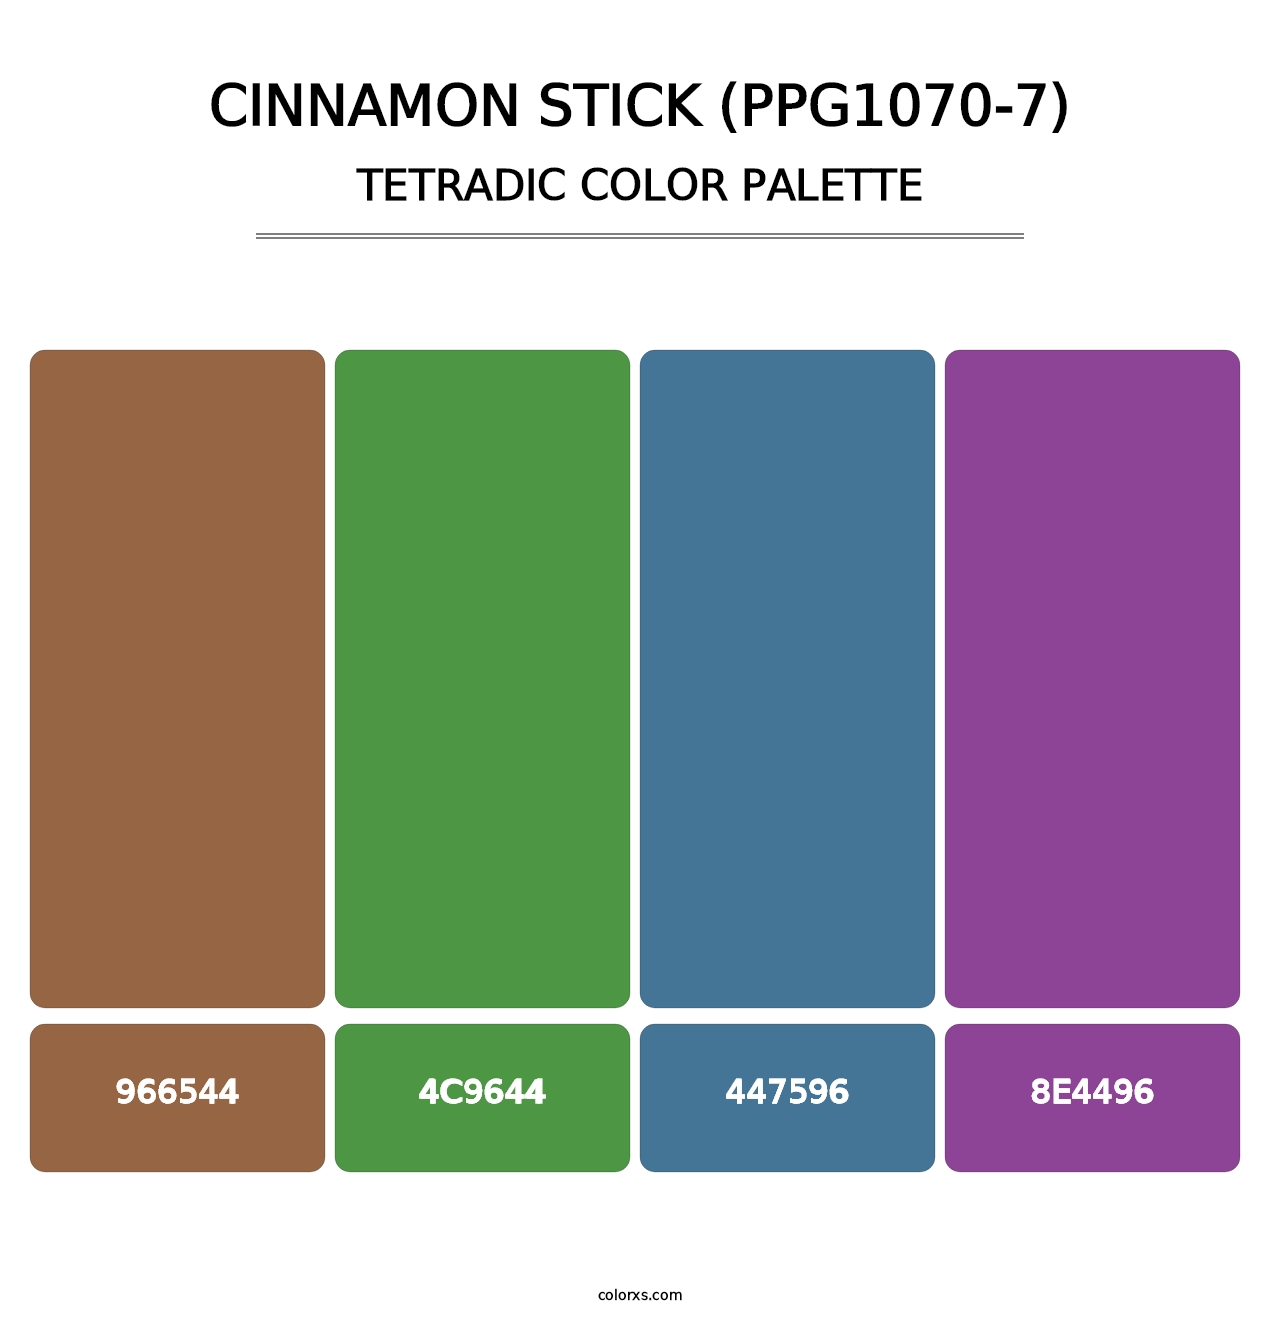 Cinnamon Stick (PPG1070-7) - Tetradic Color Palette